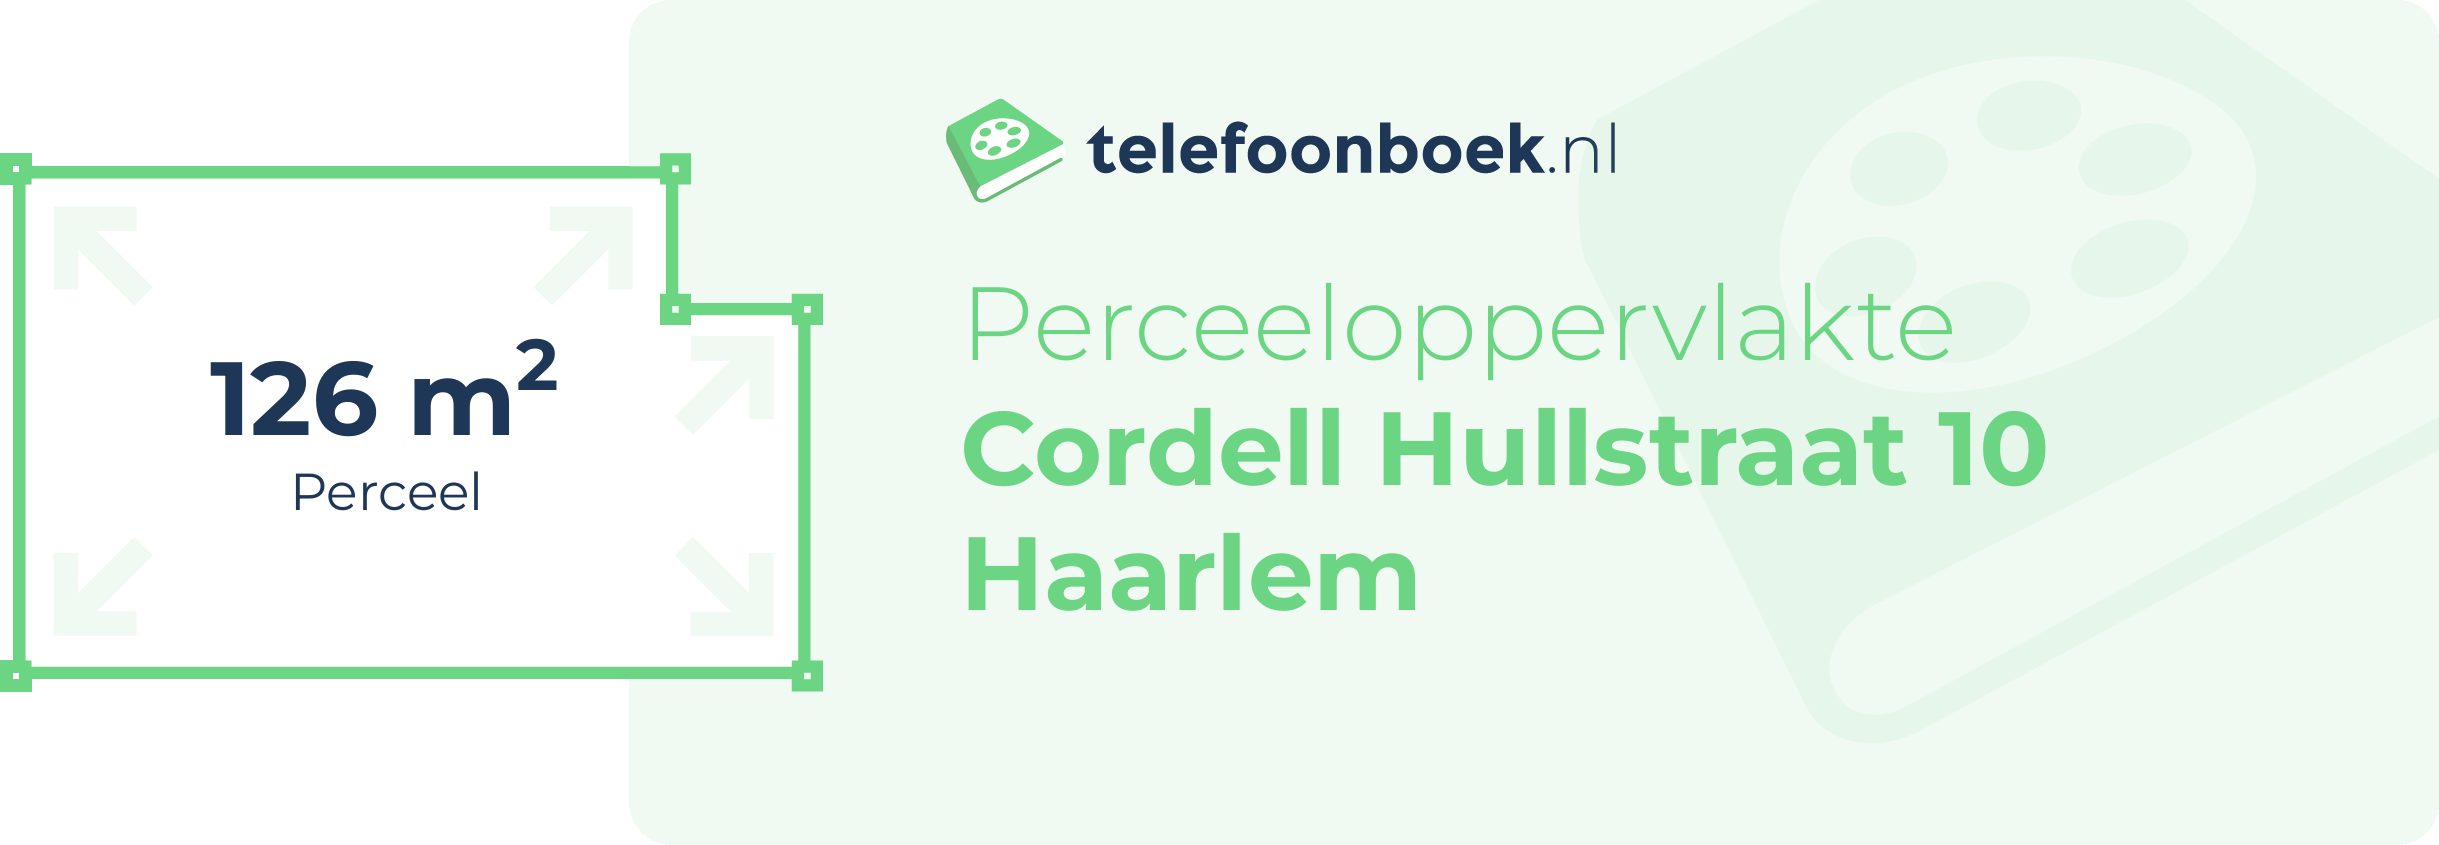 Perceeloppervlakte Cordell Hullstraat 10 Haarlem